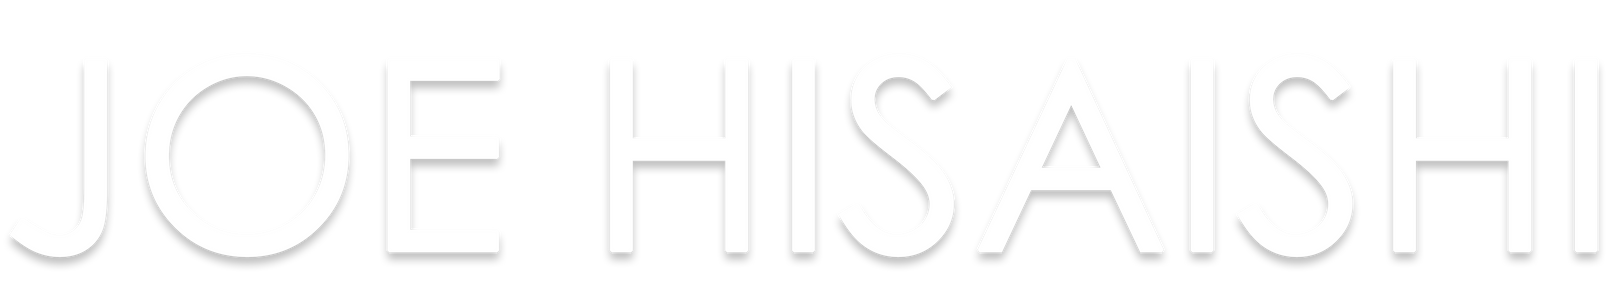 Joe Hisaishi Announces New Album 'Songs Of Hope